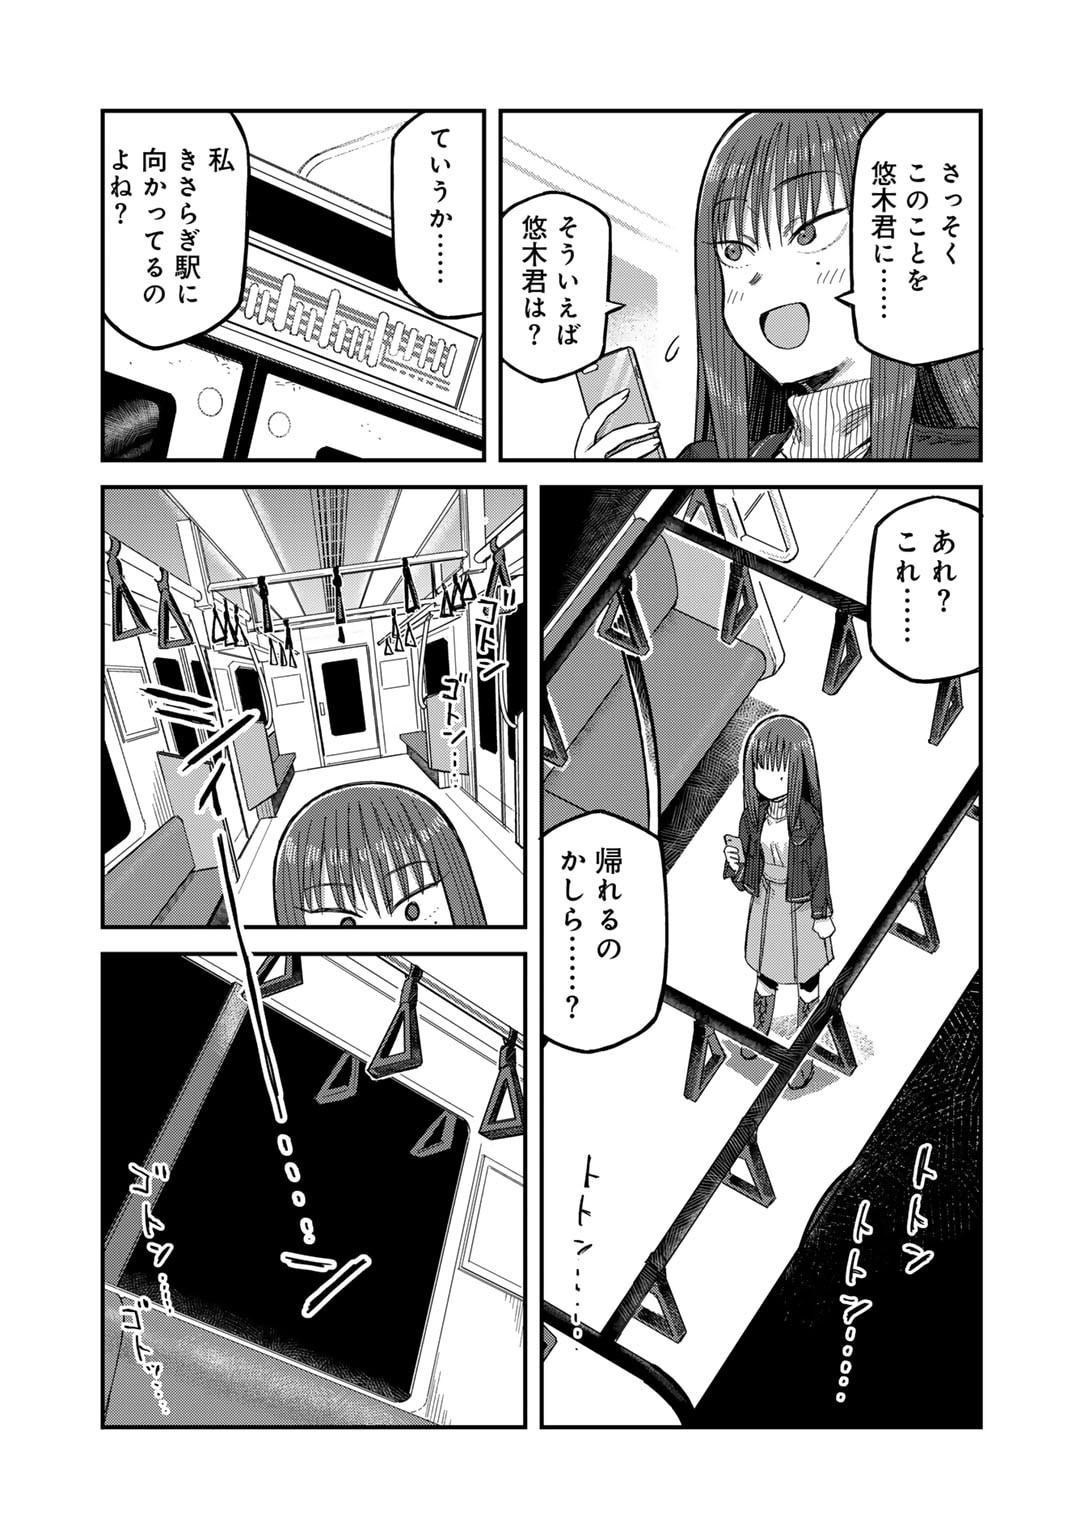 Kurono-san wa Occult ga Suki! - Chapter 4 - Page 13